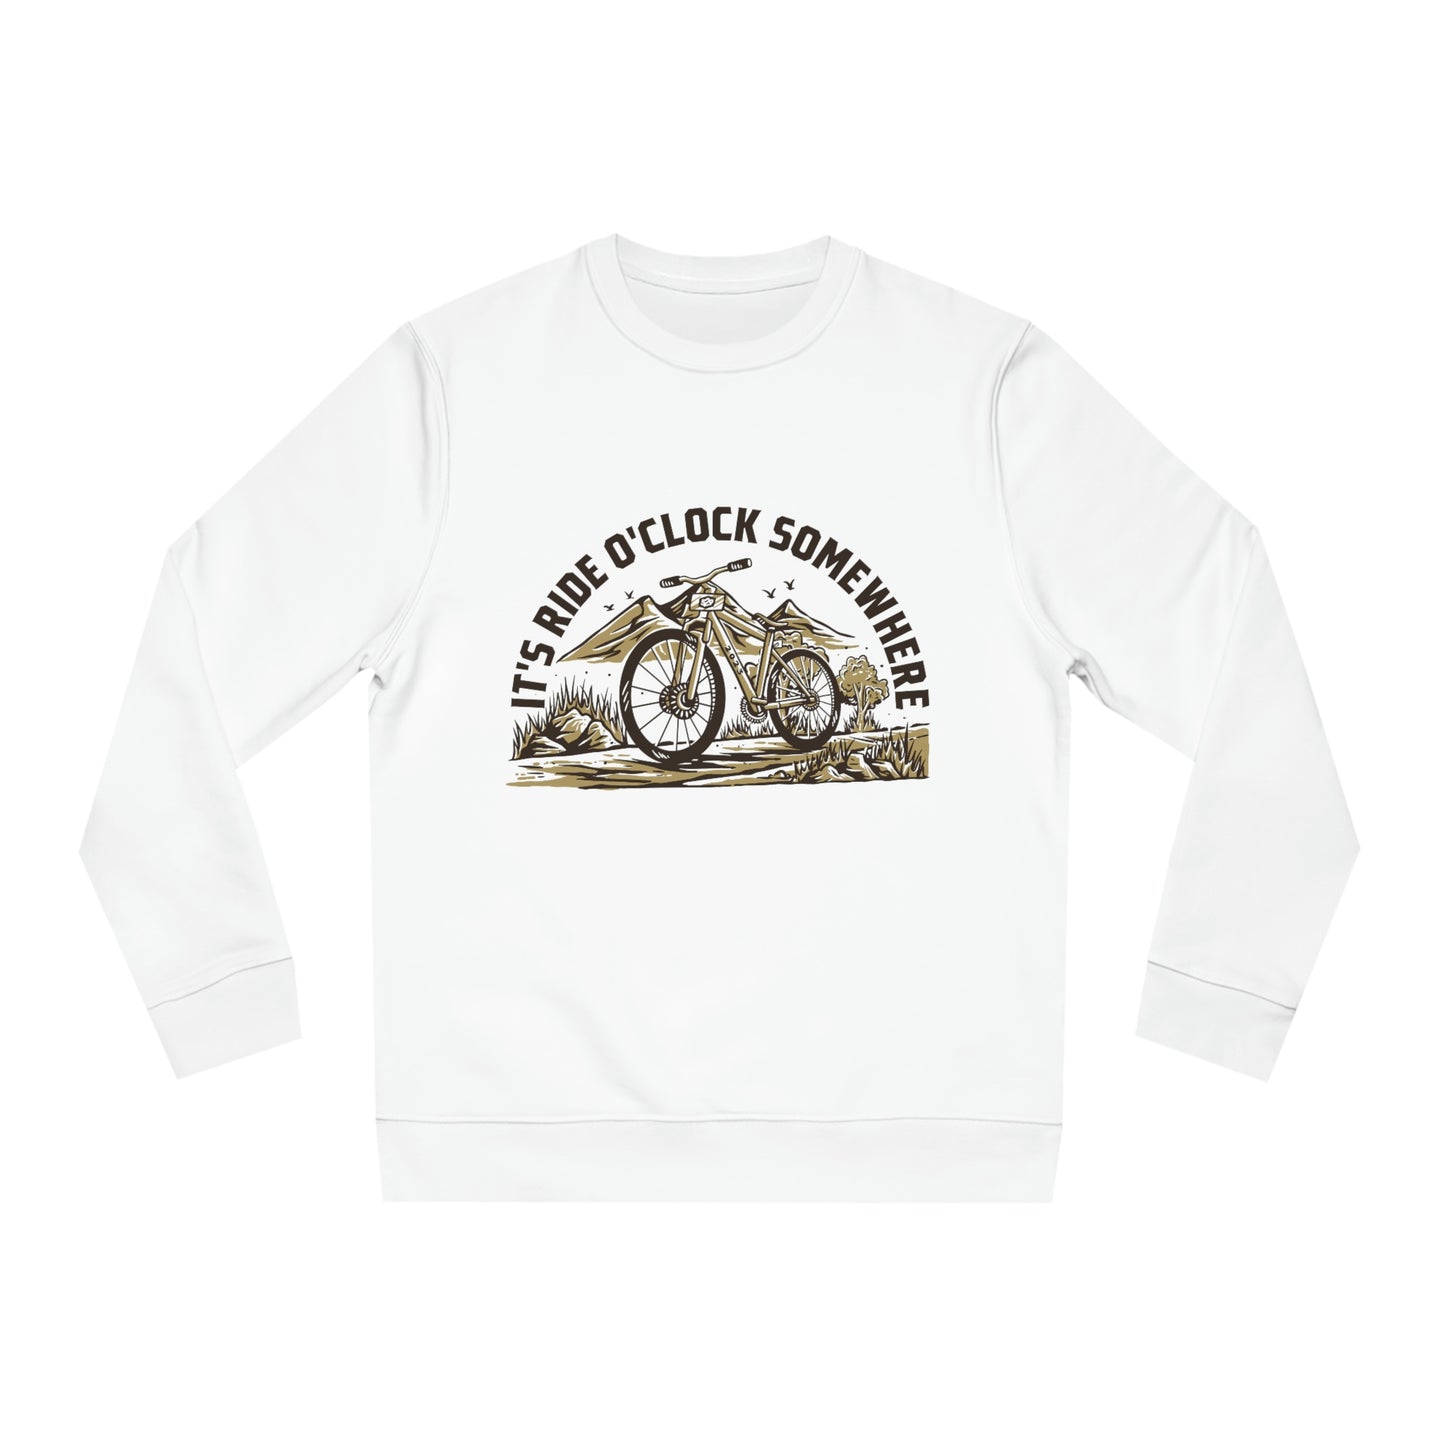 2023 529 Garage Limited Edition "It's ride o'clock somewhere" Unisex Changer Sweatshirt